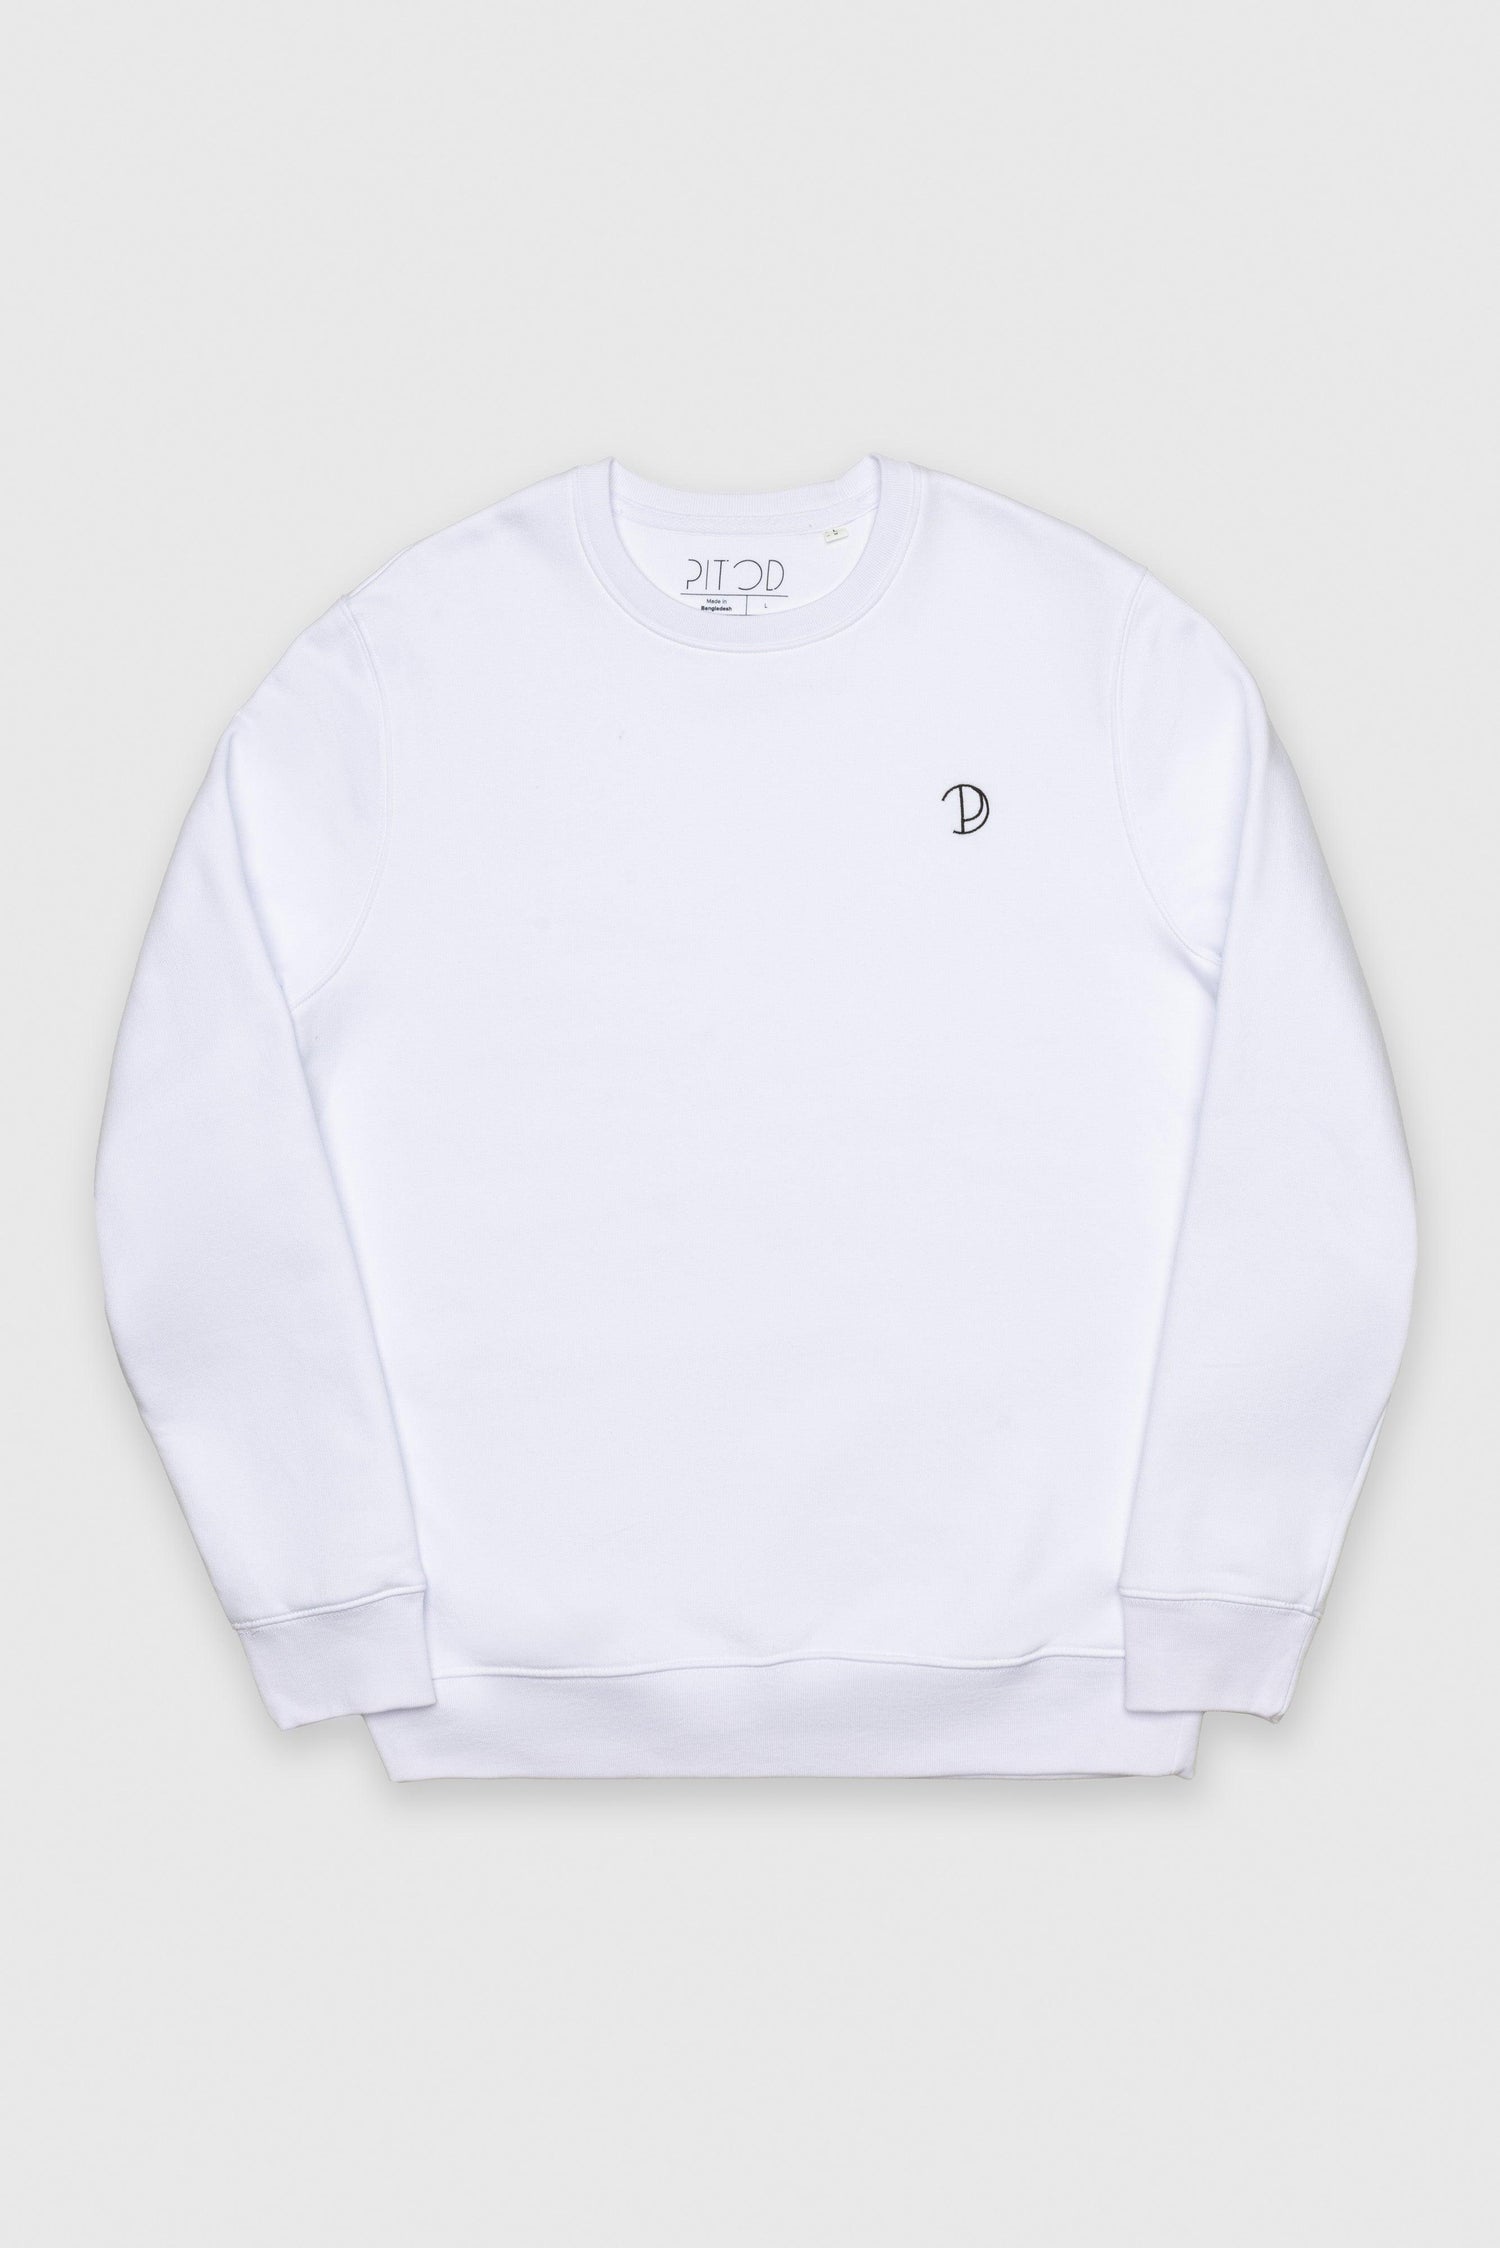 Embroidered Logo Sweatshirt | Shirts & Tops | pitod.com